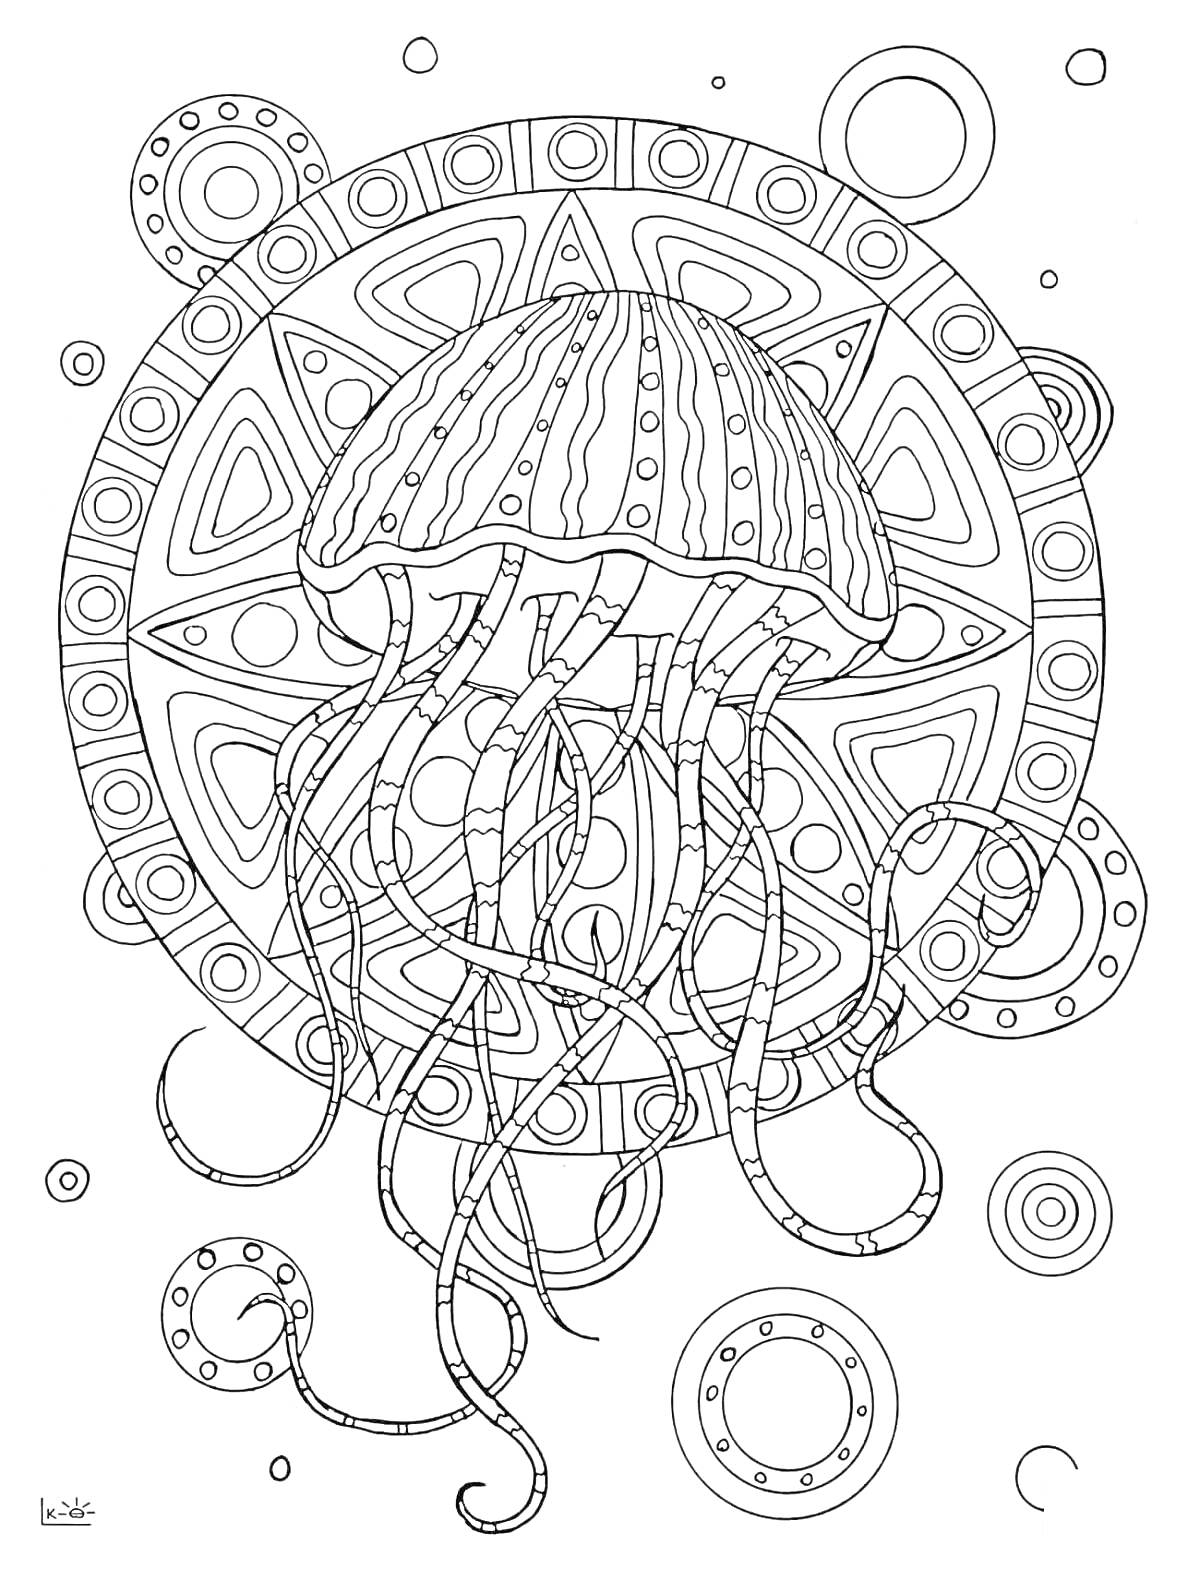 Раскраска Медуза на фоне круговых узоров